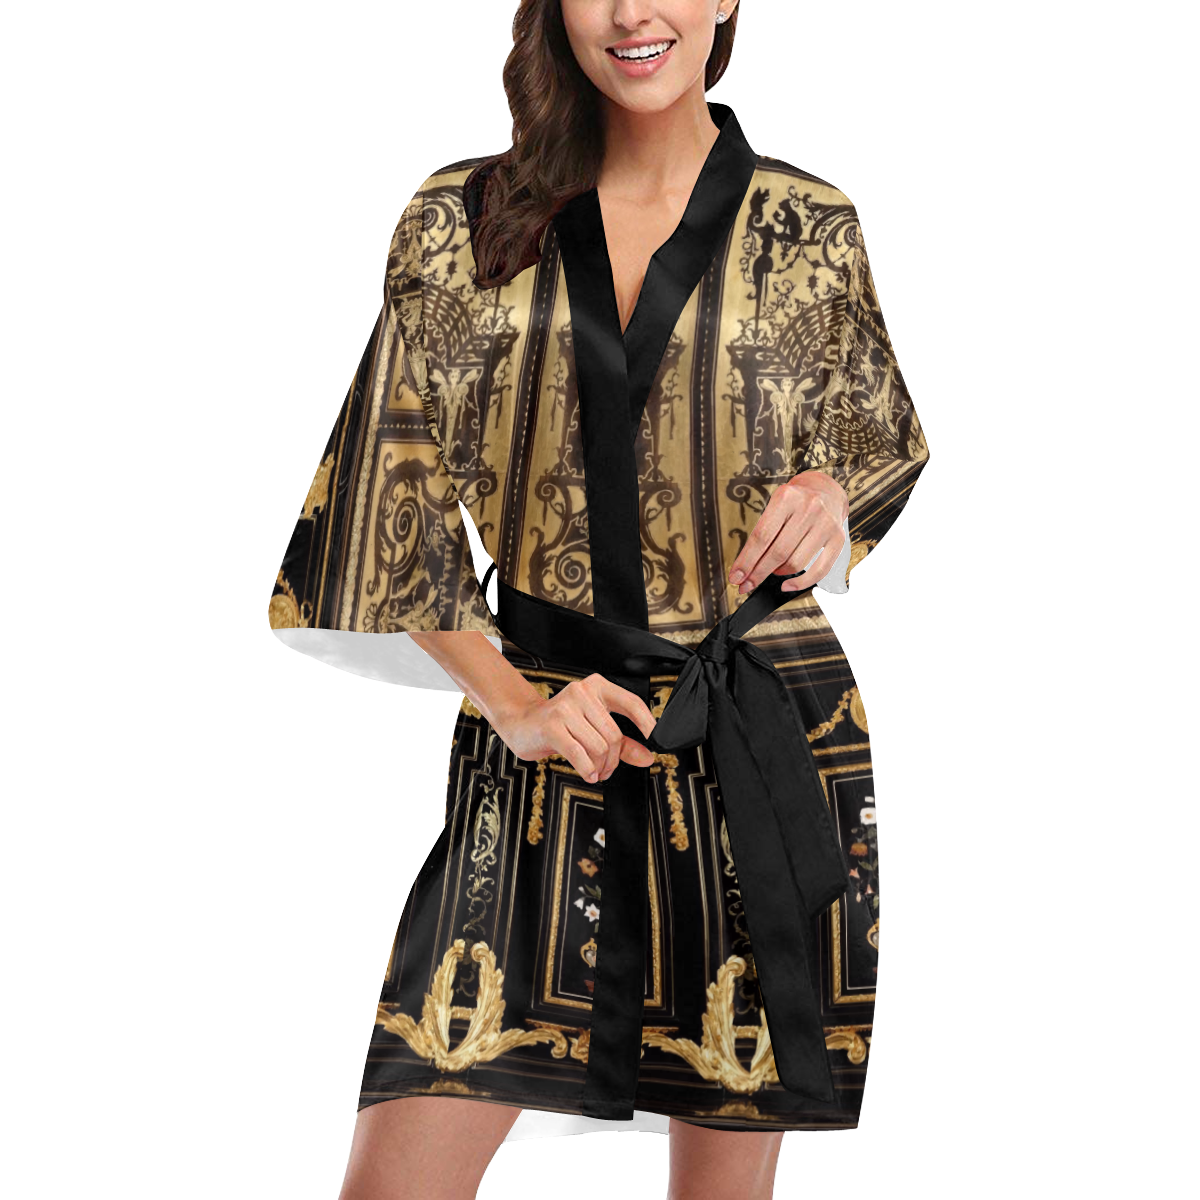 Robe | ugg bathrobe versace bathrobe sale soma robes